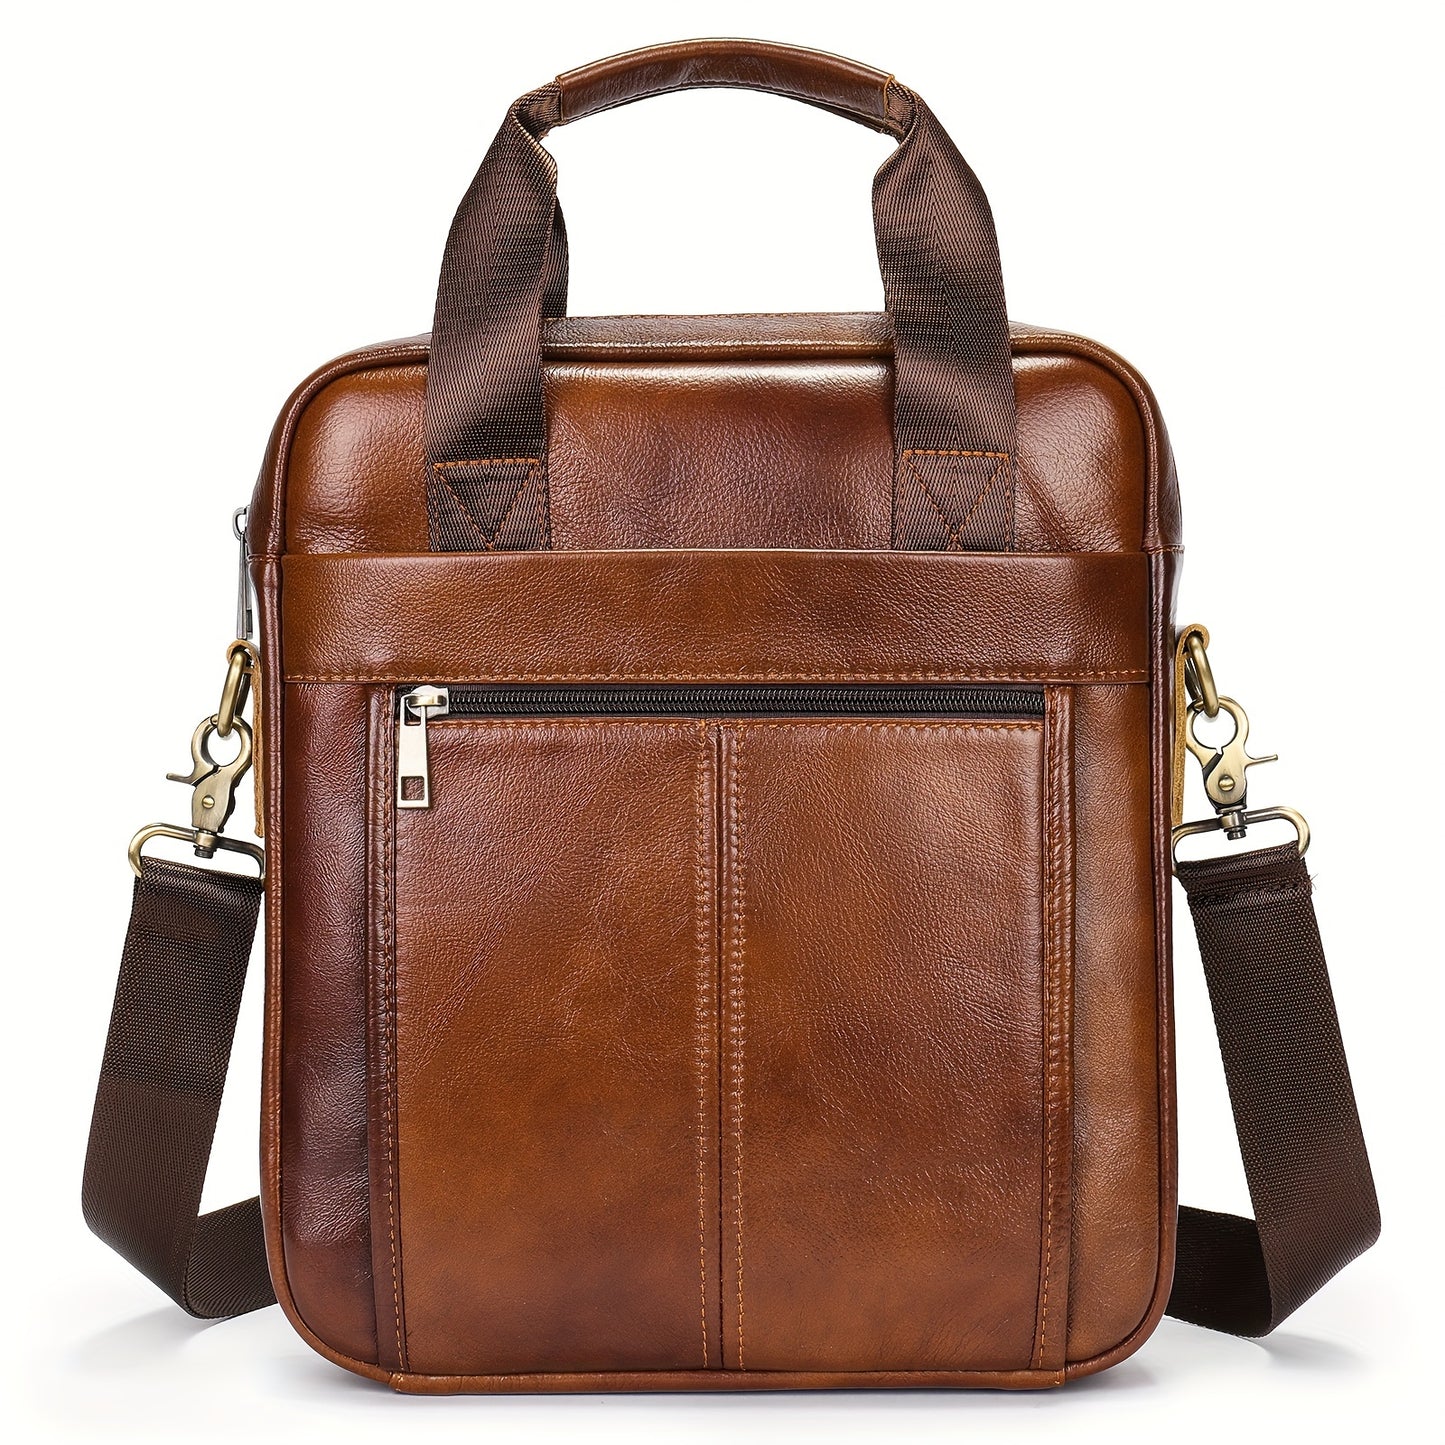 Genuine Leather Shoulder Bags for Men - Business Handbags for 13.3in Laptop